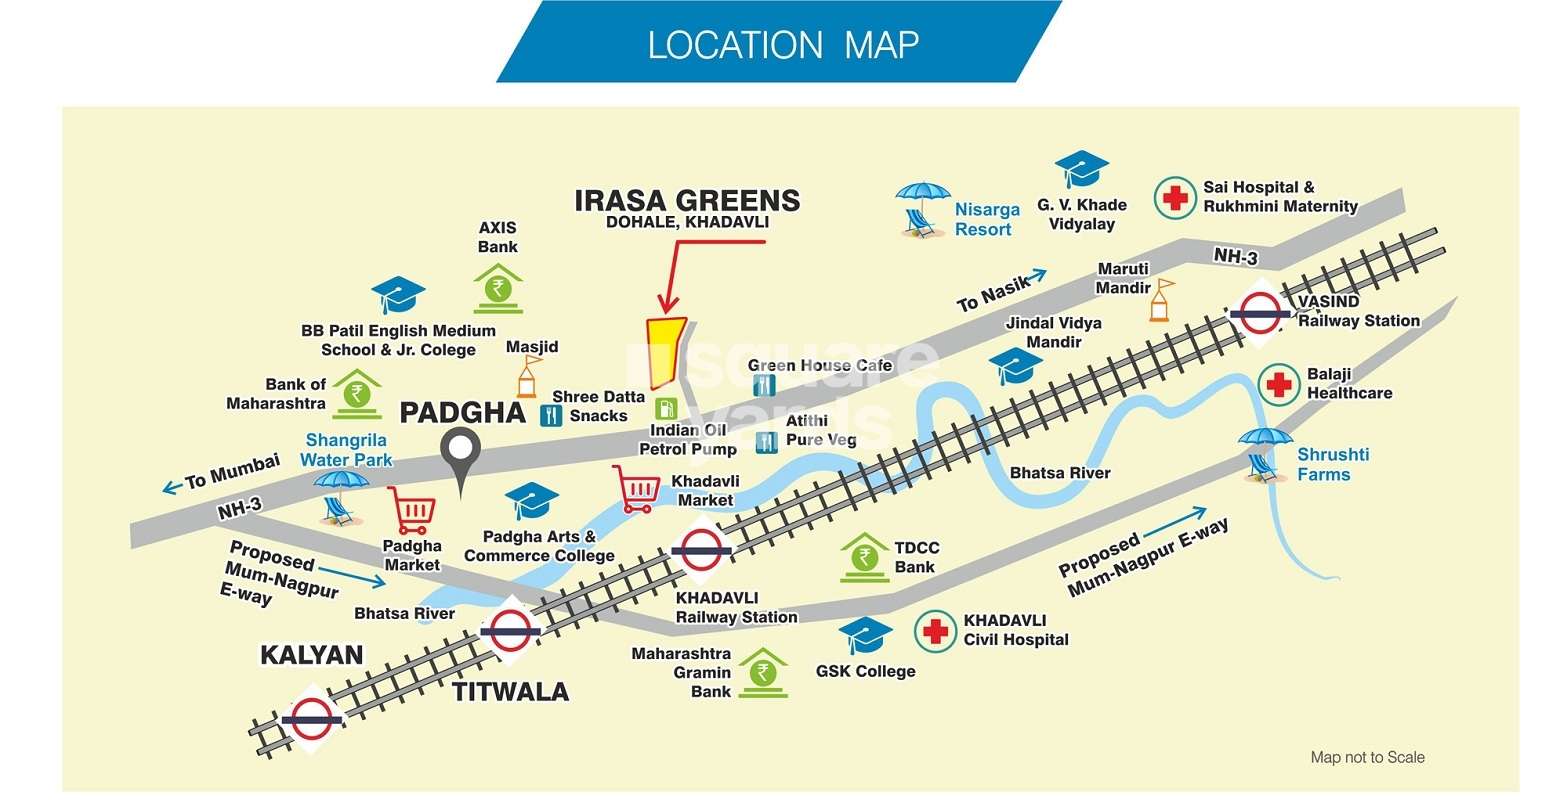 irasa greens project location image1